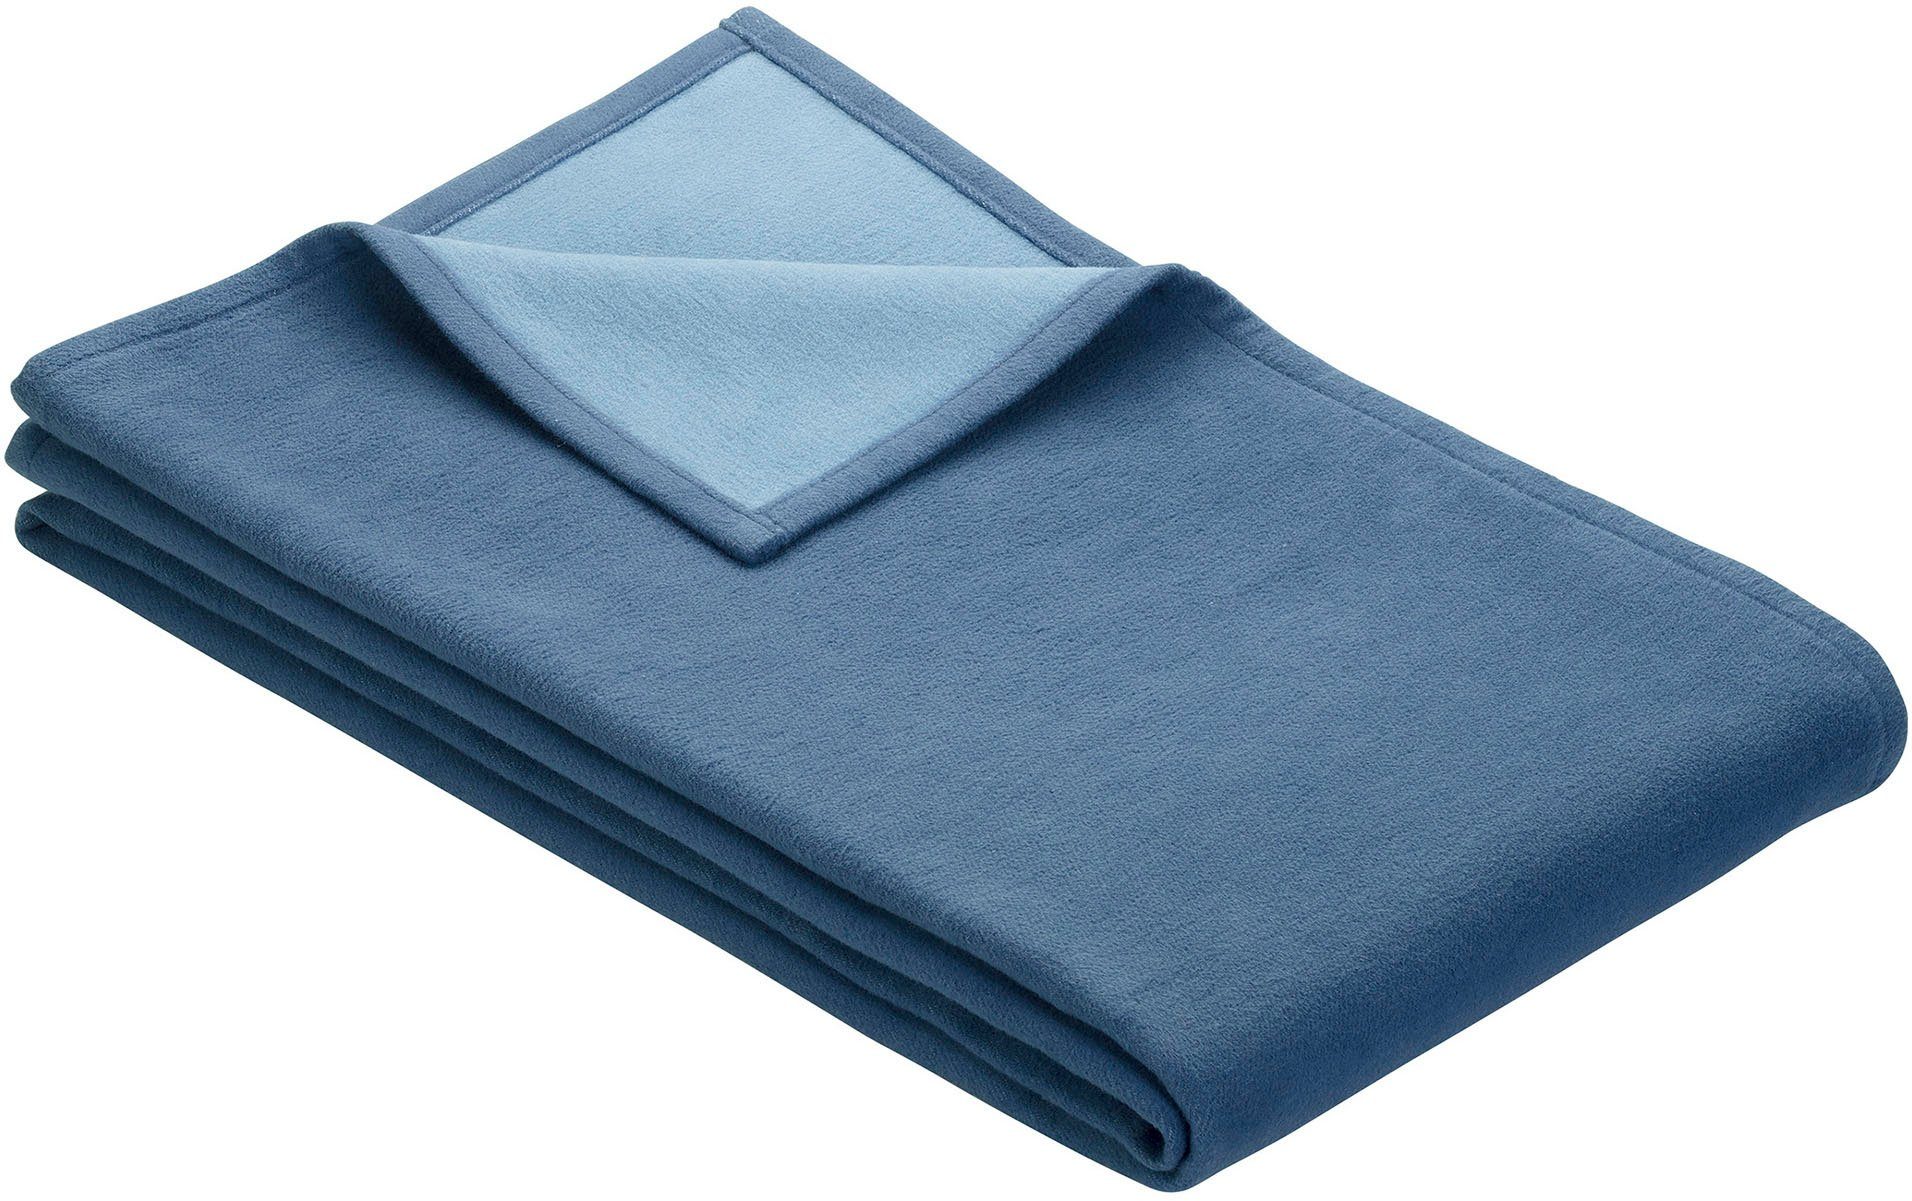 Wohndecke Cotton Pur, IBENA, in trendigen Farben blau/hellblau